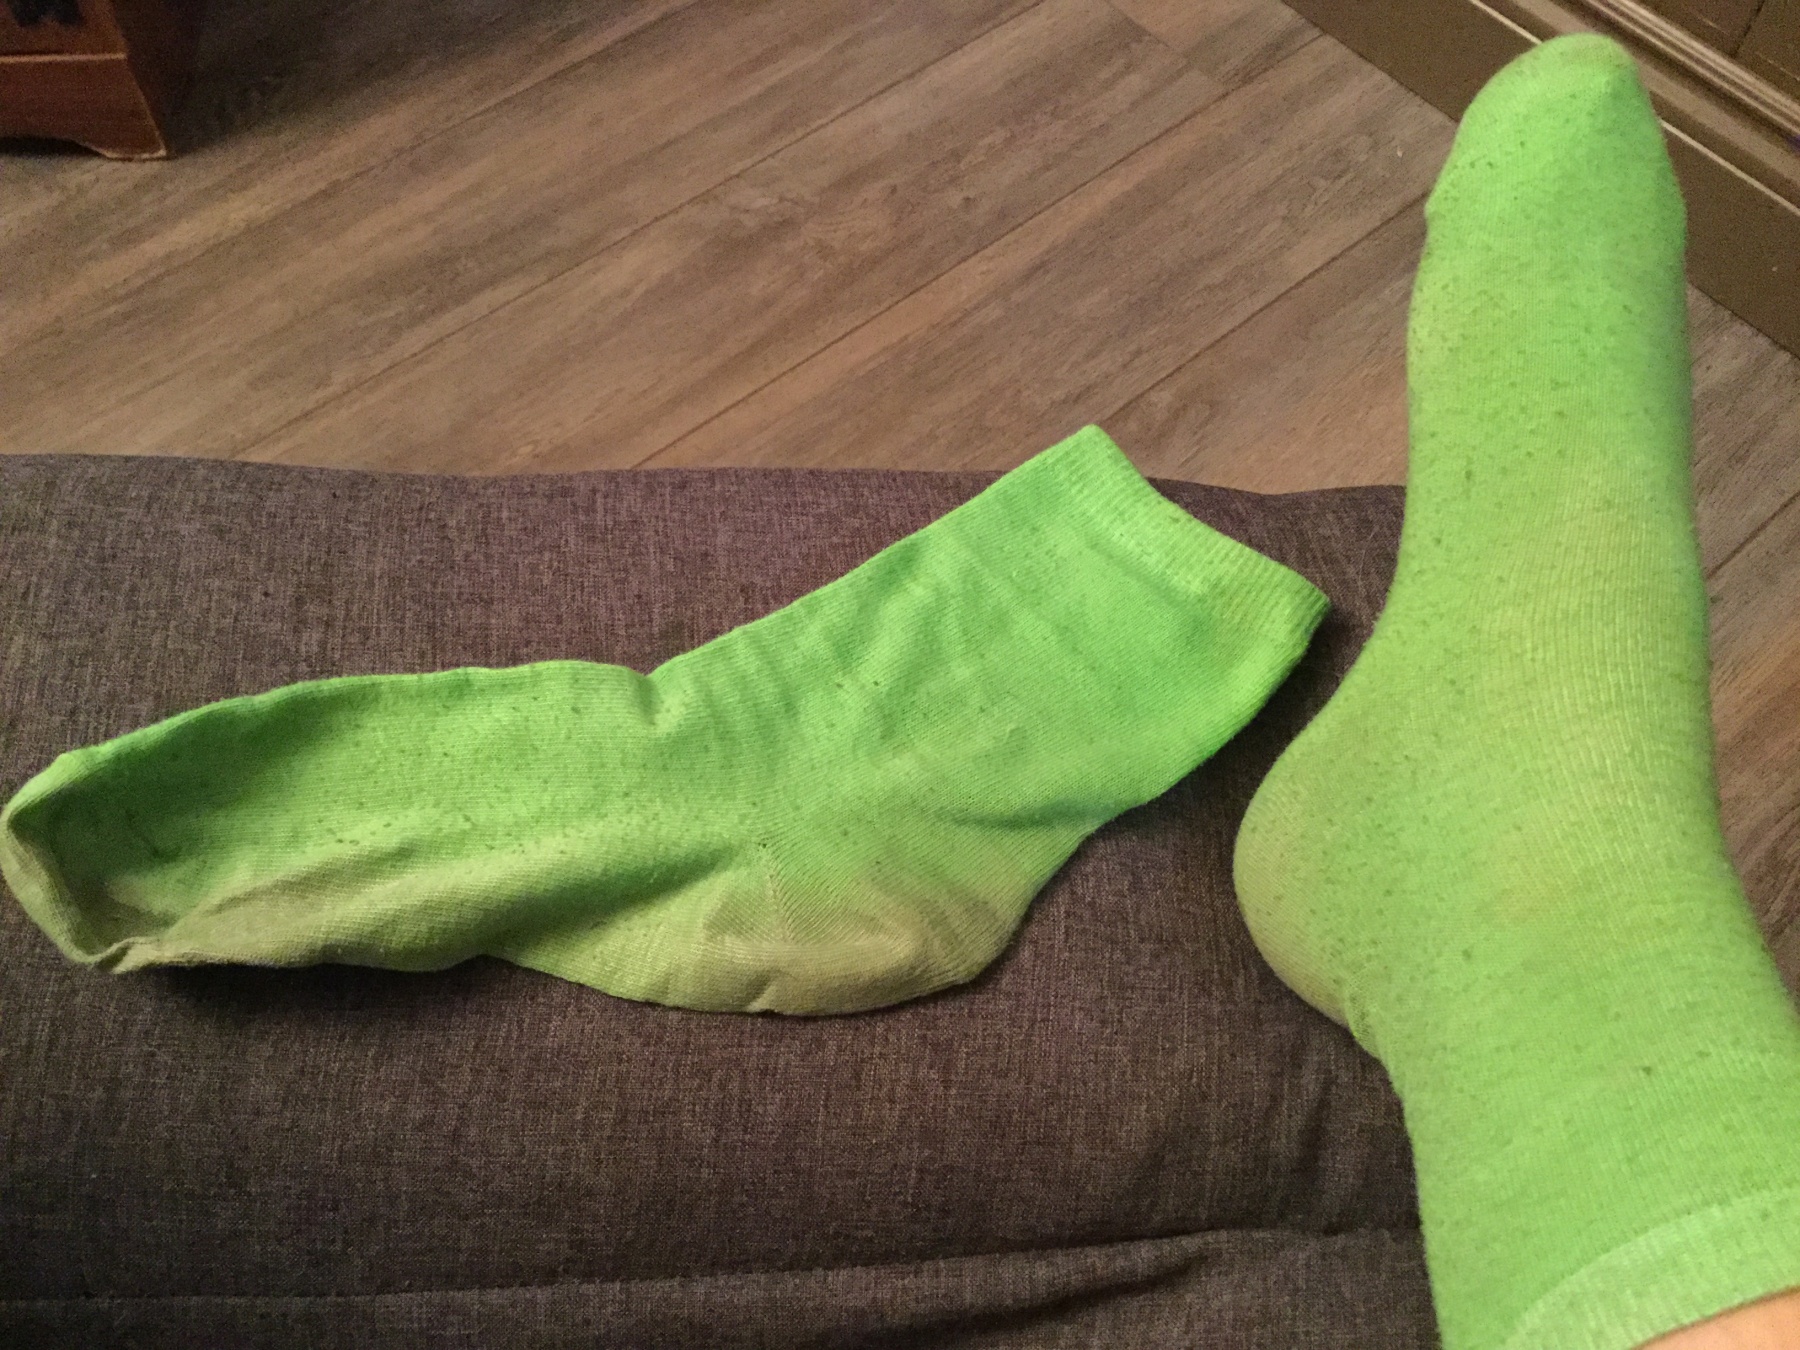 Smelly green socks!